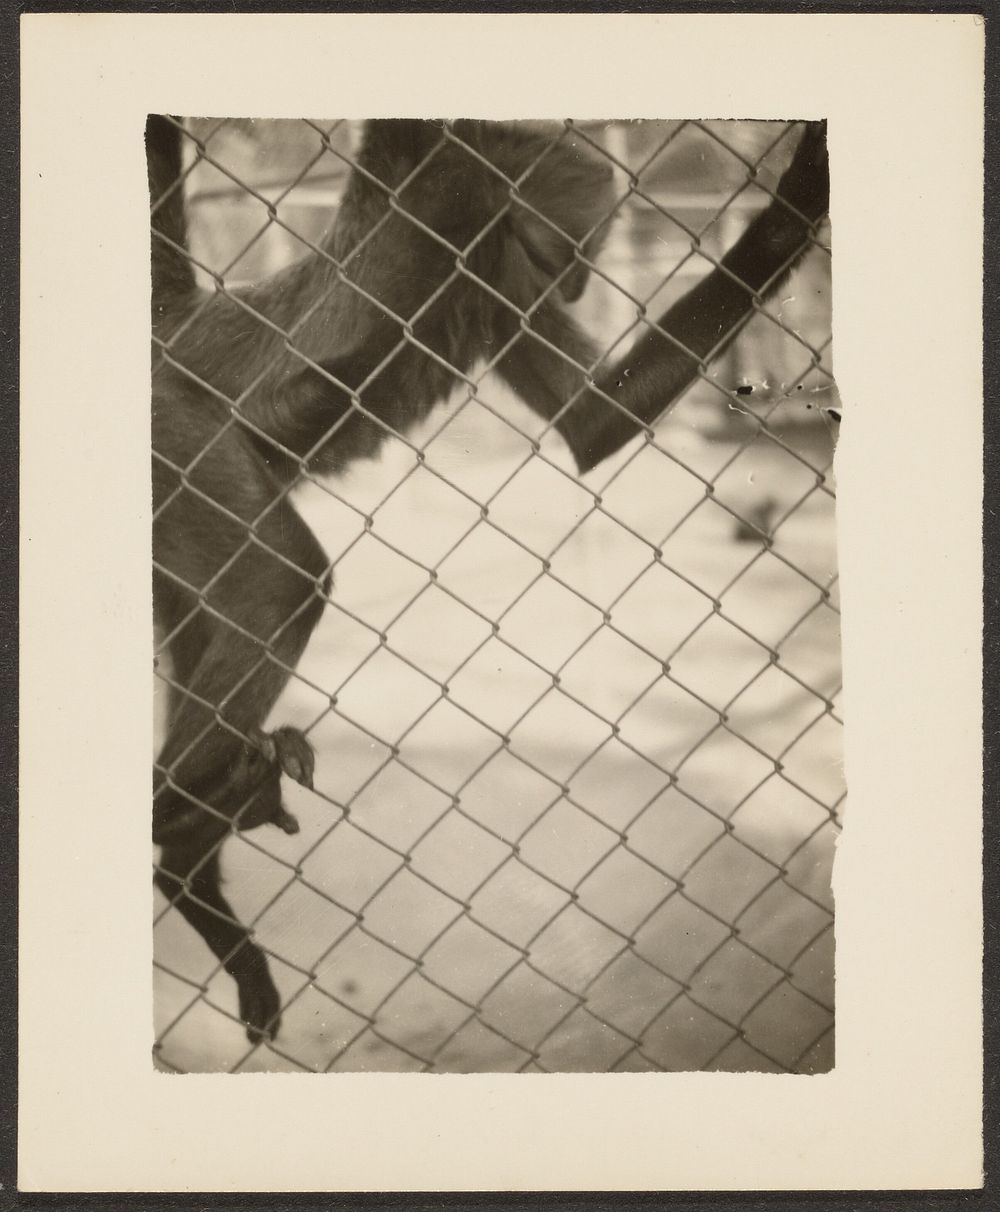 Monkey in Cage by Louis Fleckenstein